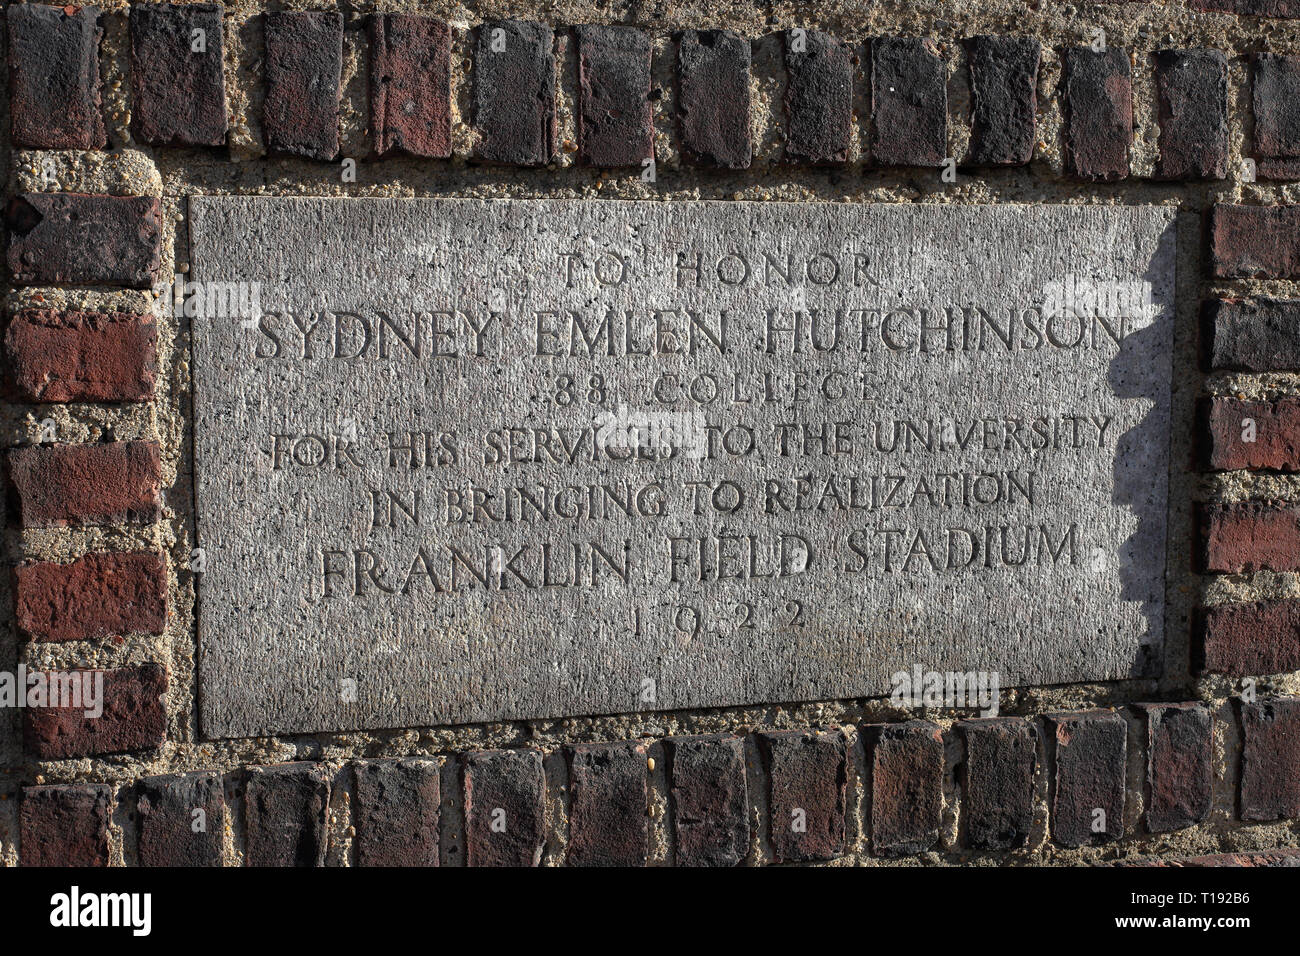 Philadelphia, PA / USA - October 18, 2018: Franklin Field Stadium cornerstone marker for University of Pennsylvania Stock Photo